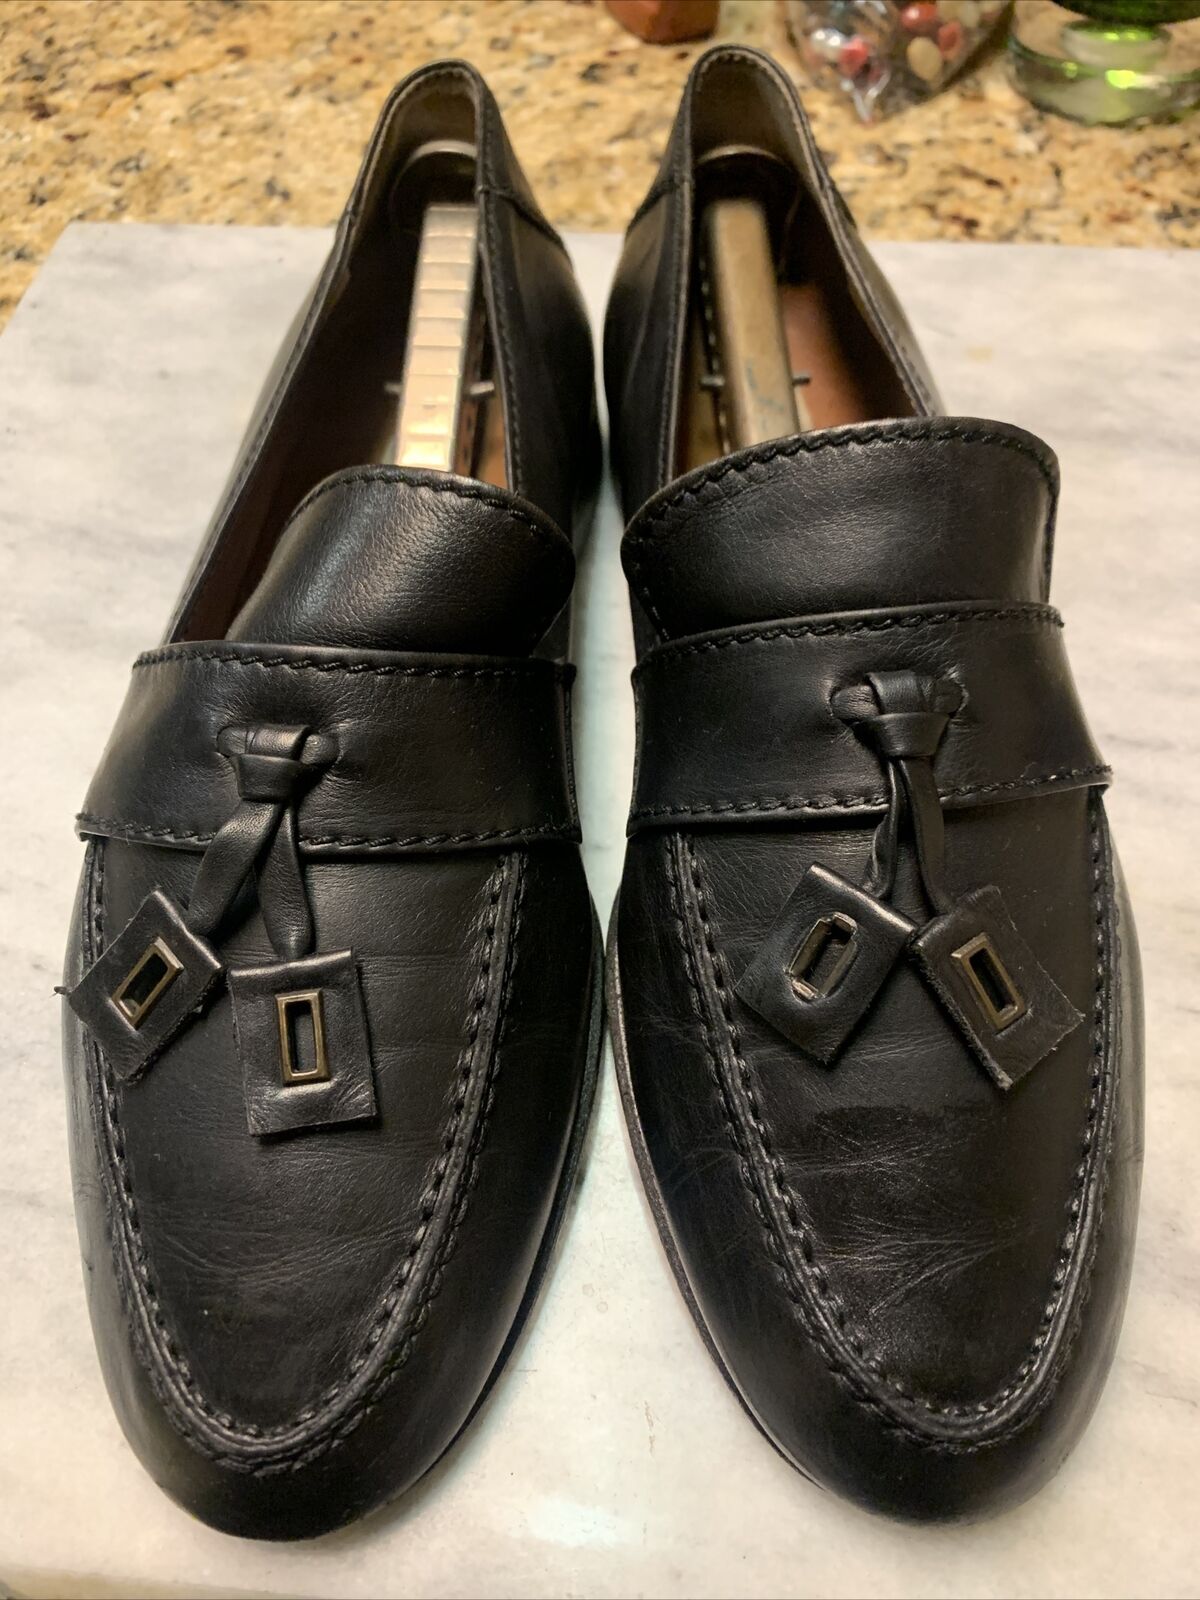 Versace Vintage Loafers Dress Shoes Black Leather Size 8 EXCELLENT CONDITION****